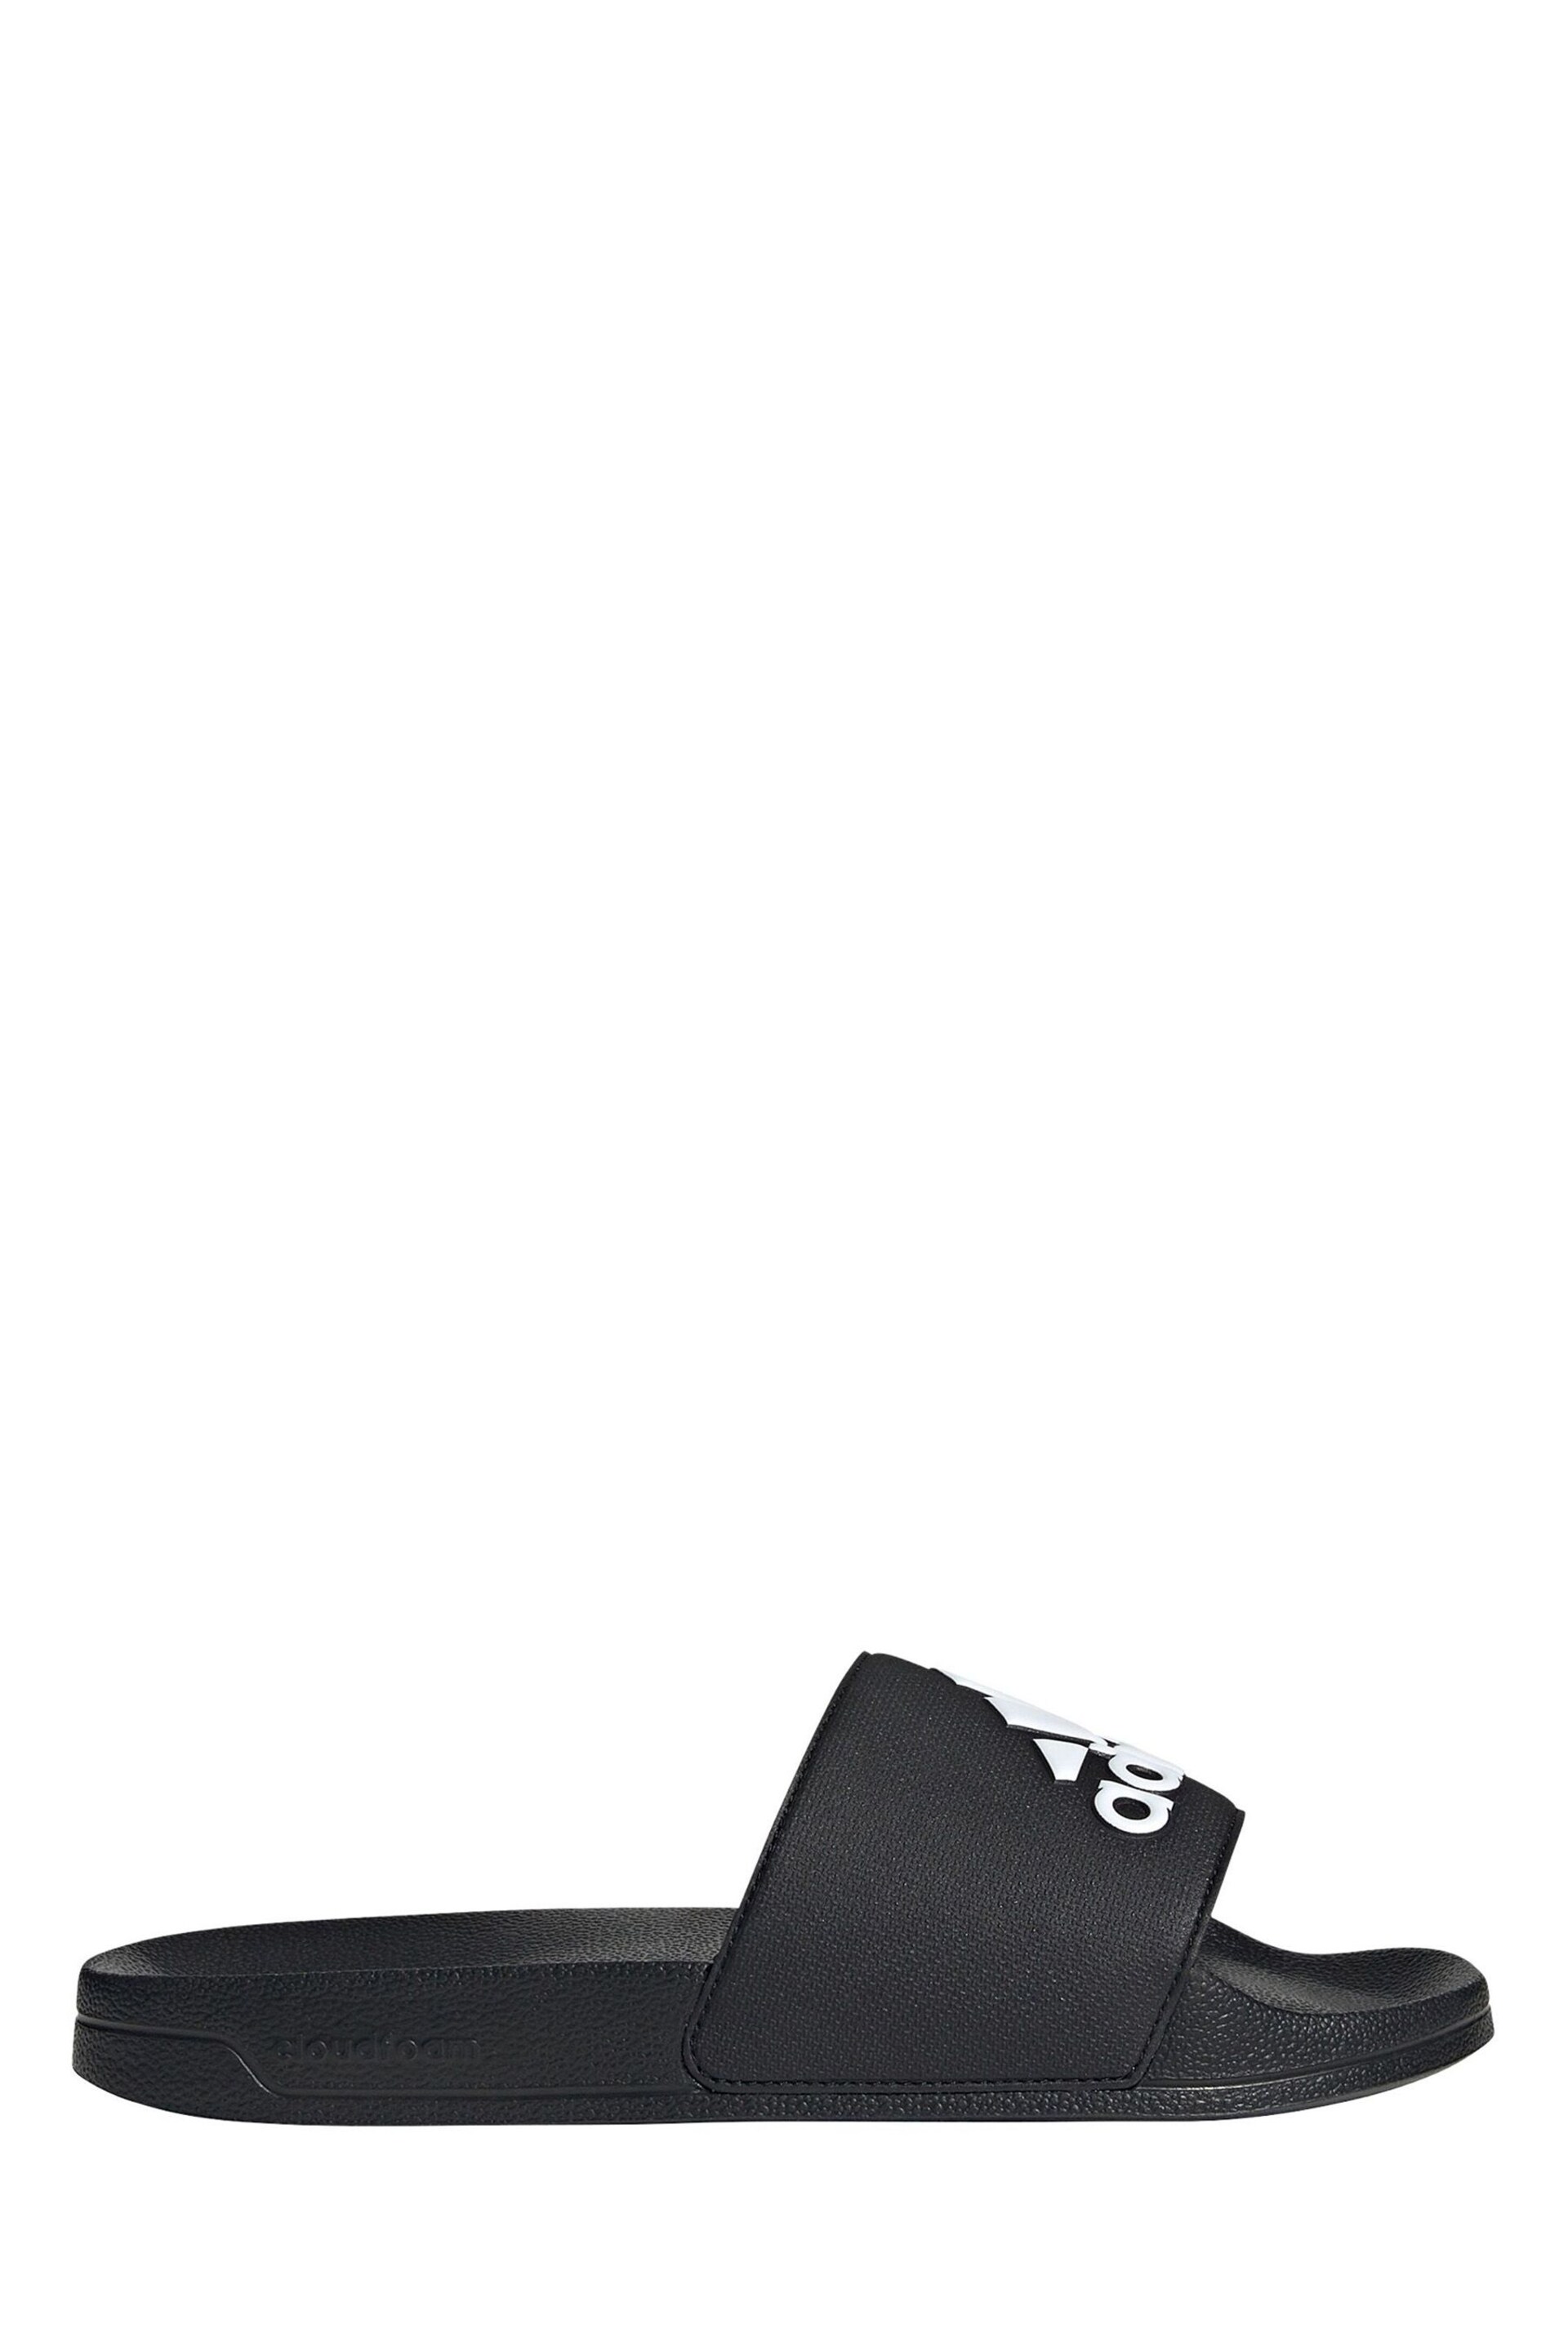 adidas Black Sportswear Adilette Shower Slides - Image 4 of 10